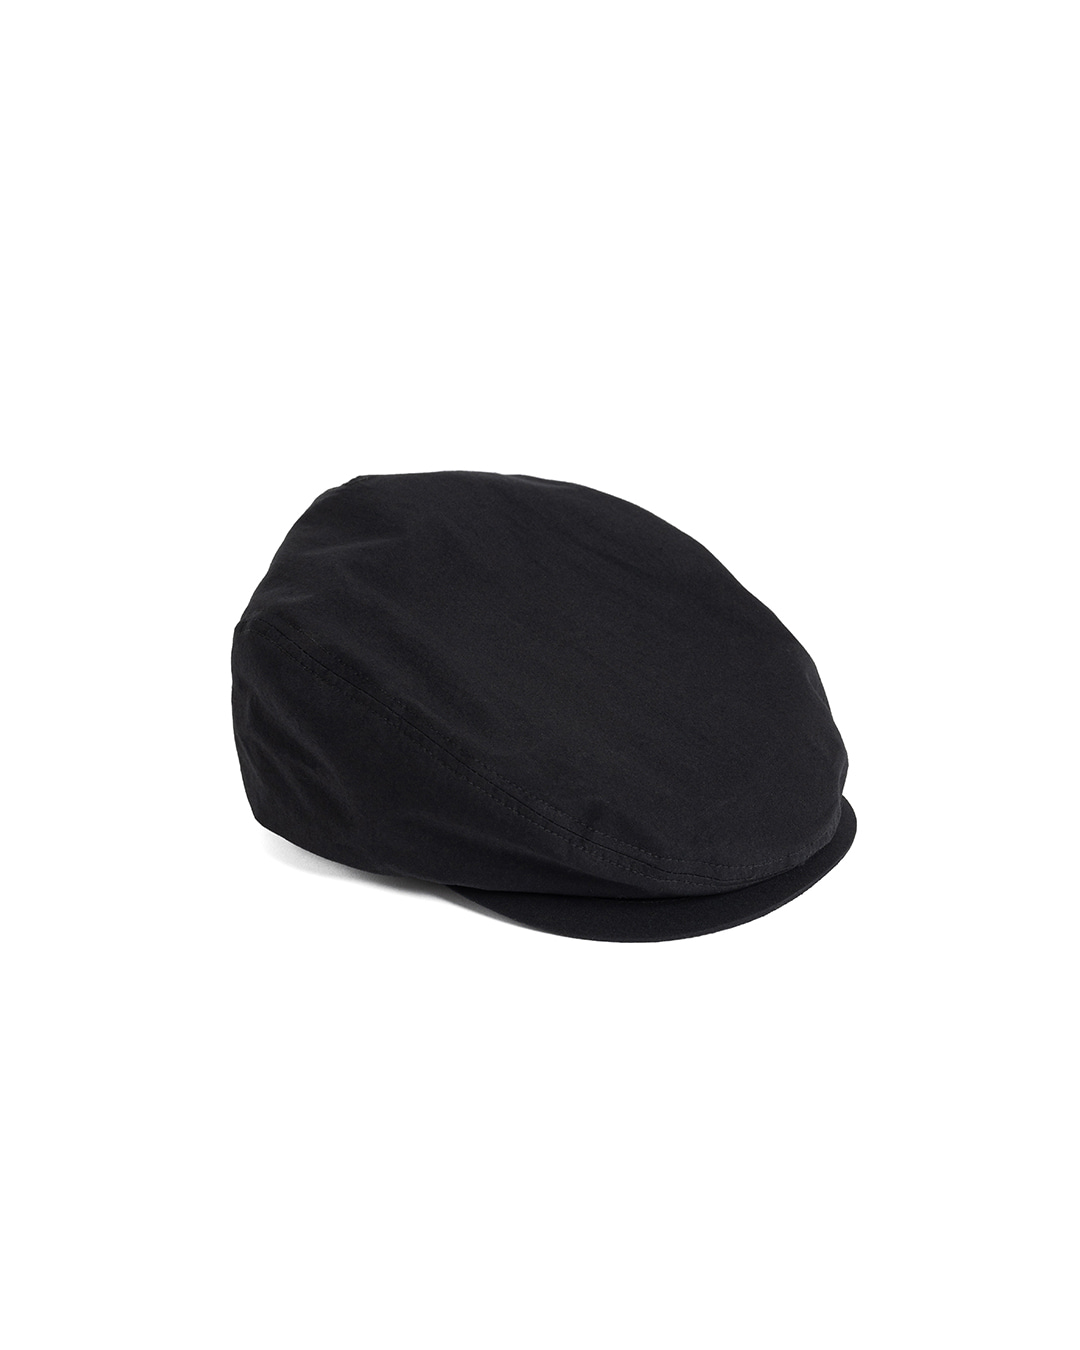 CN HUNTING CAP (black)